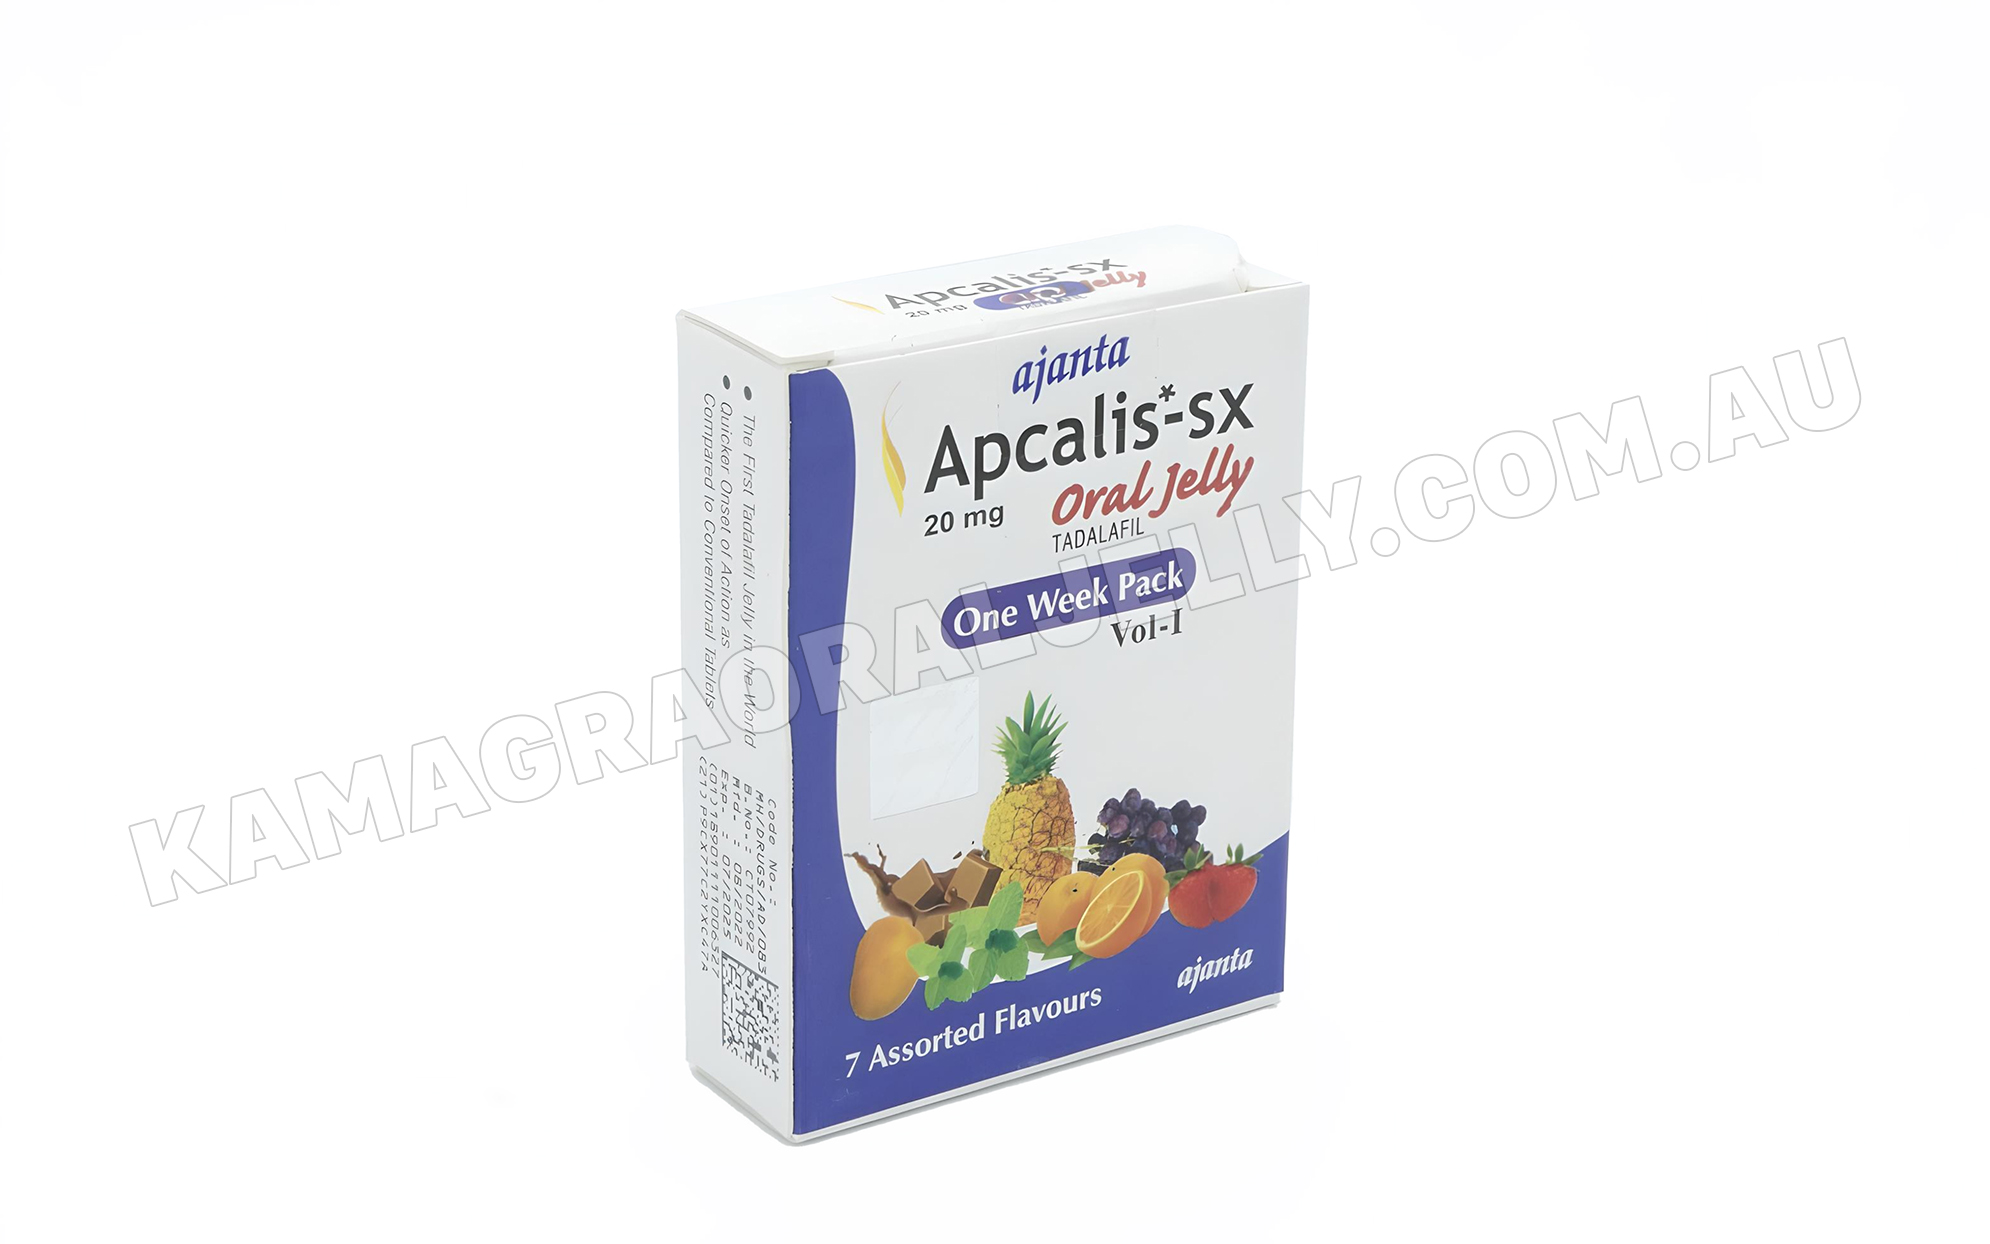 Enriching Benefits of Apcalis SX Oral Jelly